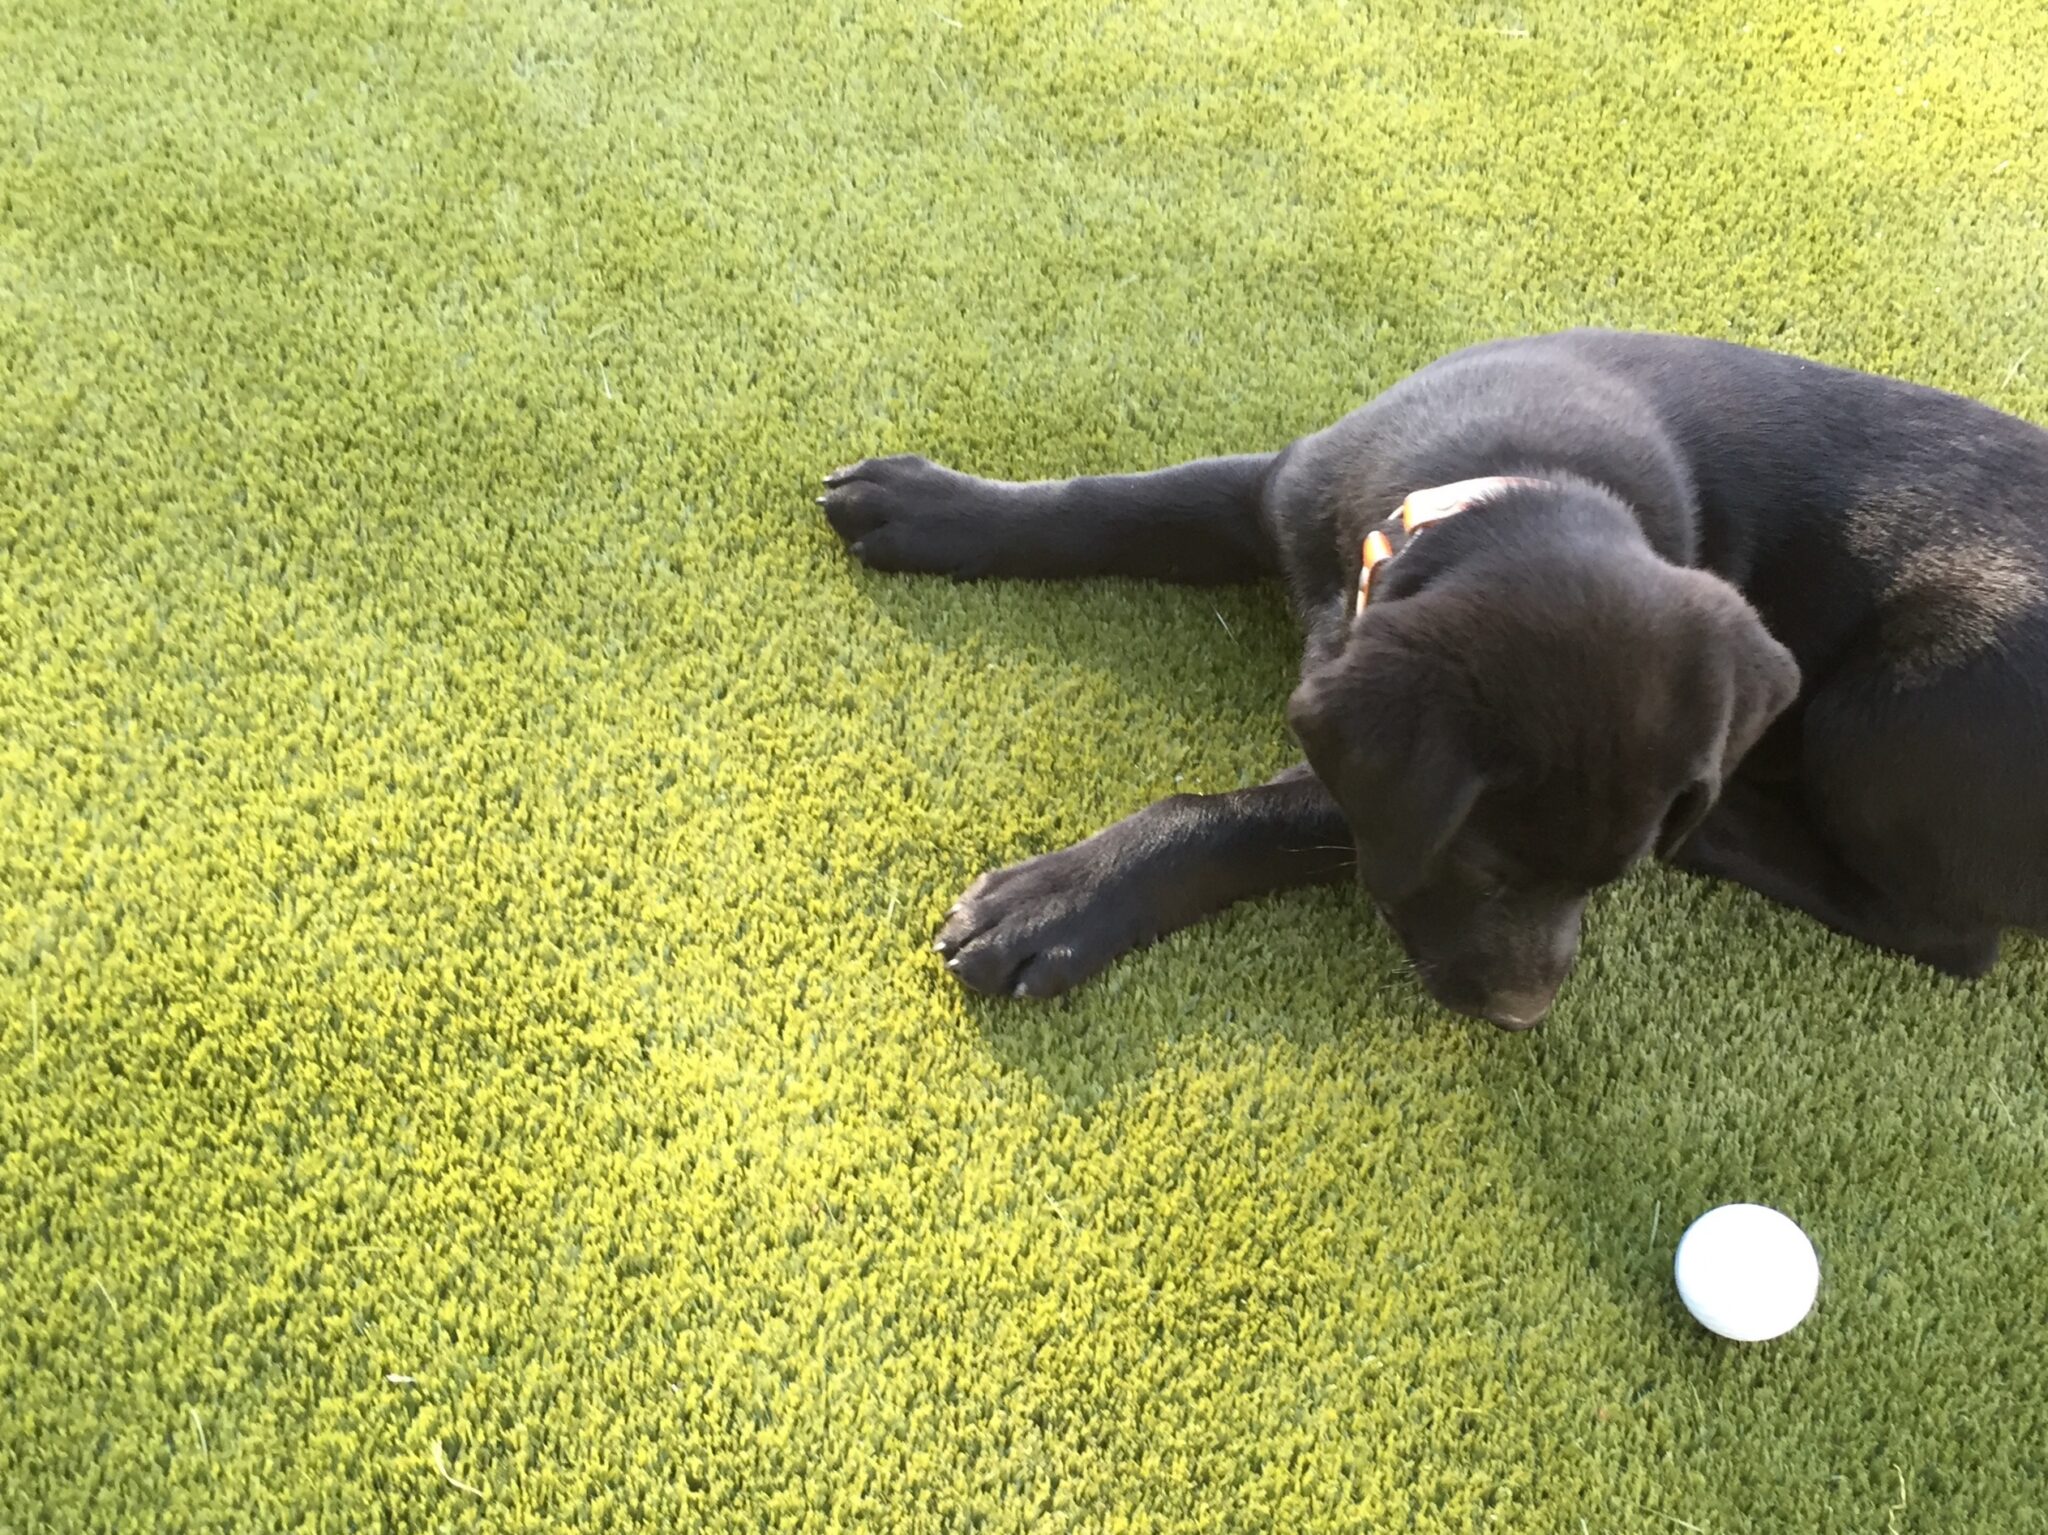 Dog relaxing on artificial grass